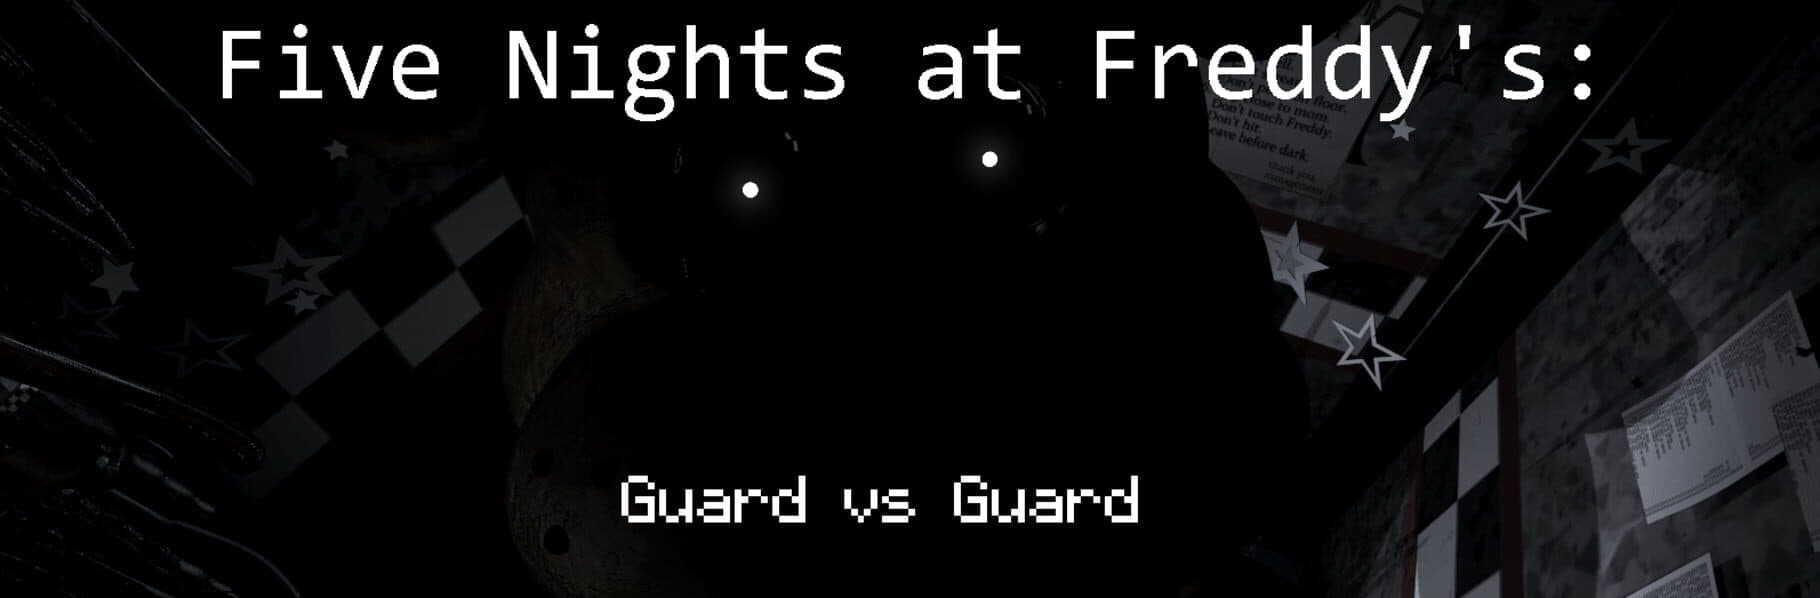 Five Nights At Freddy's: Guard Vs Guard Image